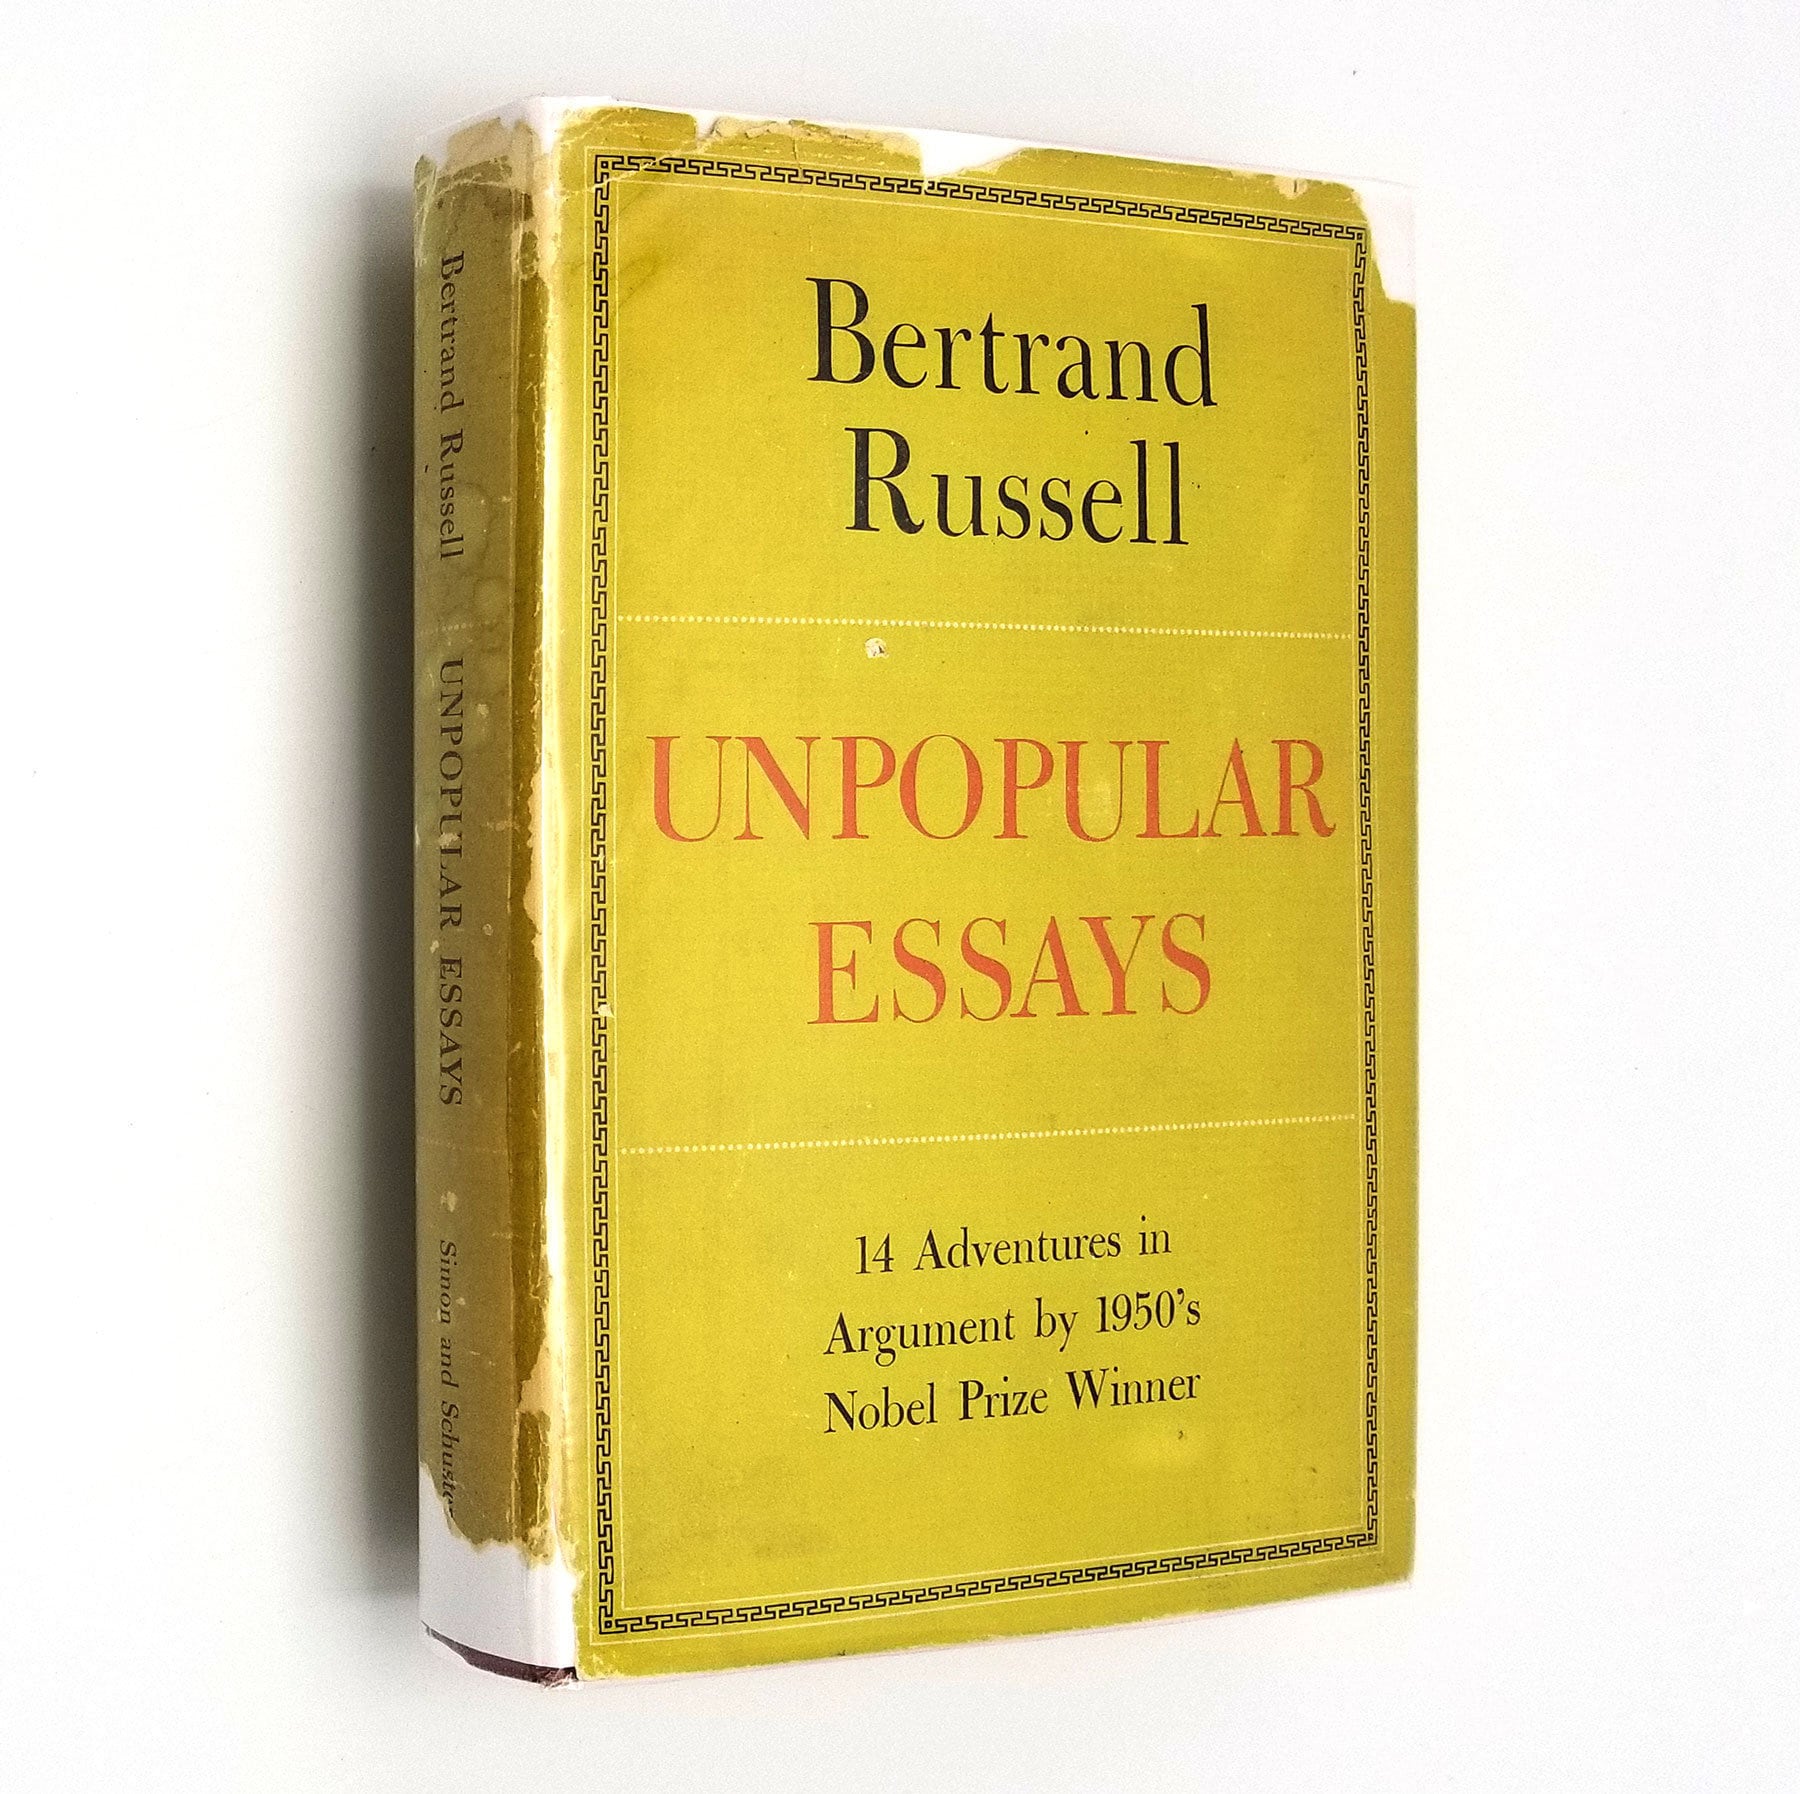 unpopular essays bertrand russell pdf